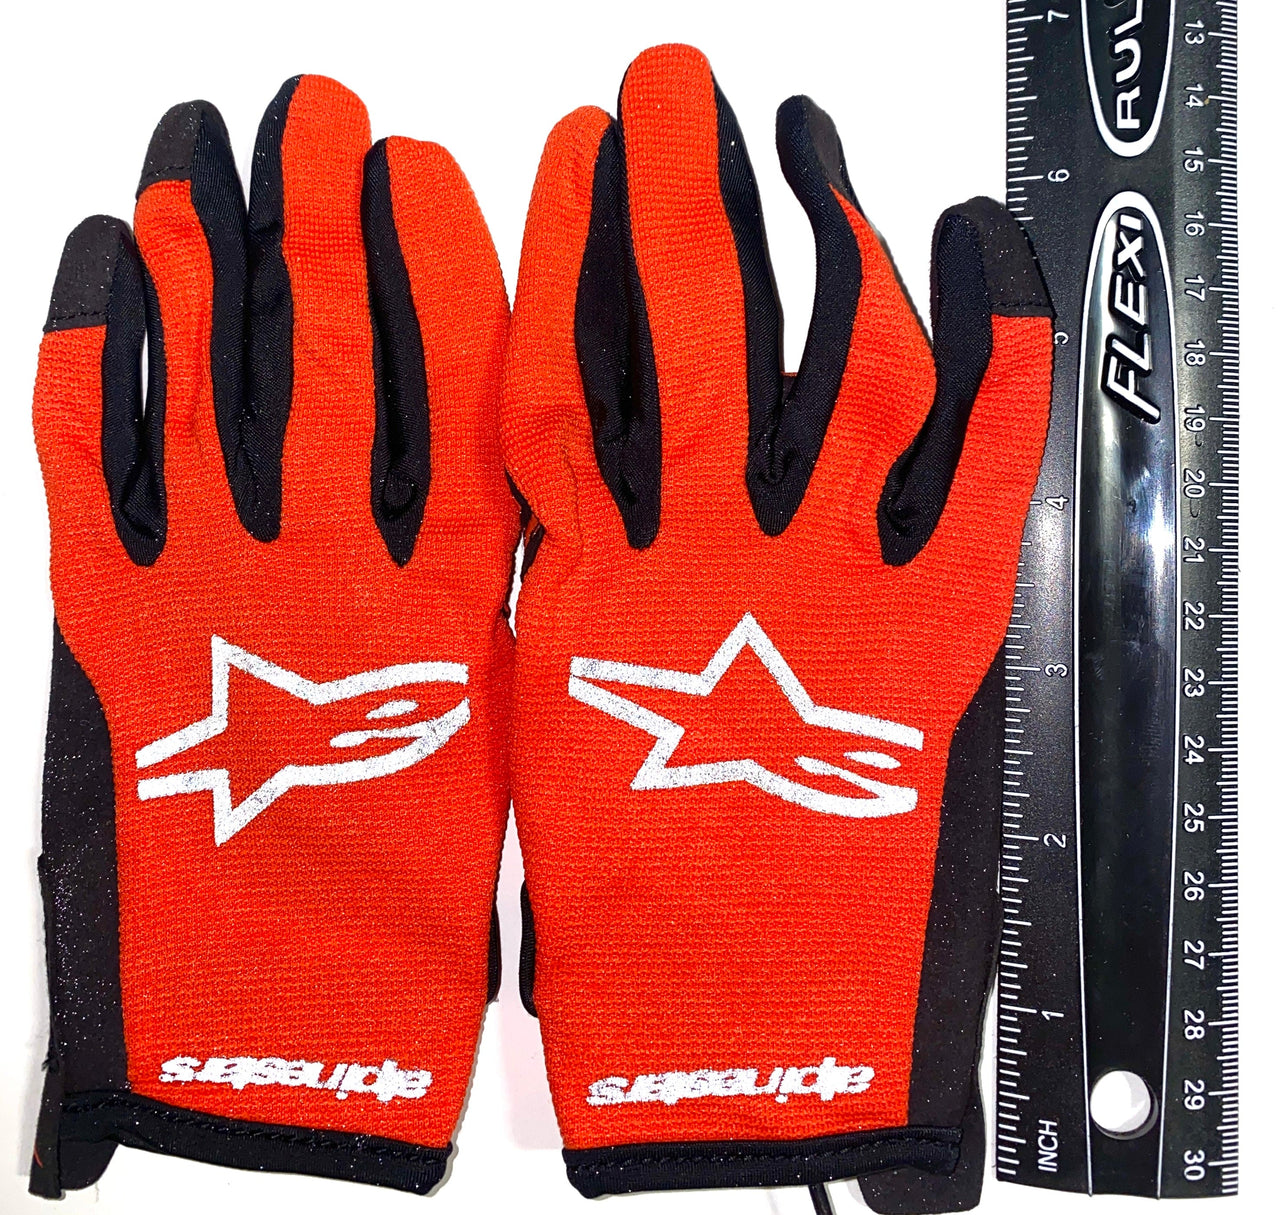 Children's MX Gloves- Alpine Stars Radar (Size Youth S) HOT ORANGE and BLACK